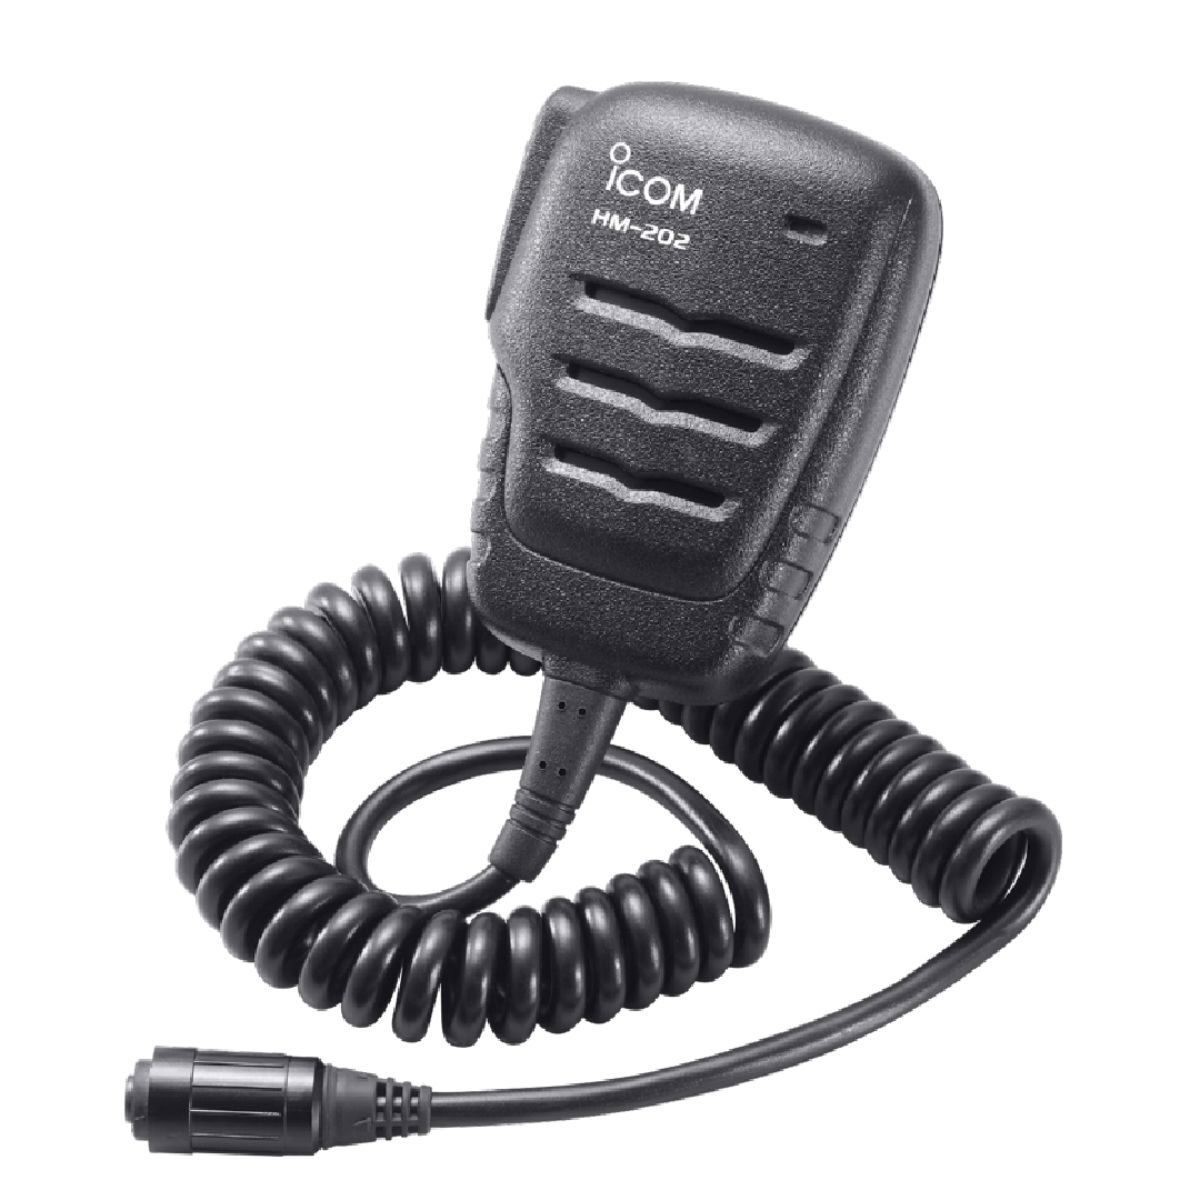 ICOM HM-202 Waterproof Speaker Microphone for IC-M73